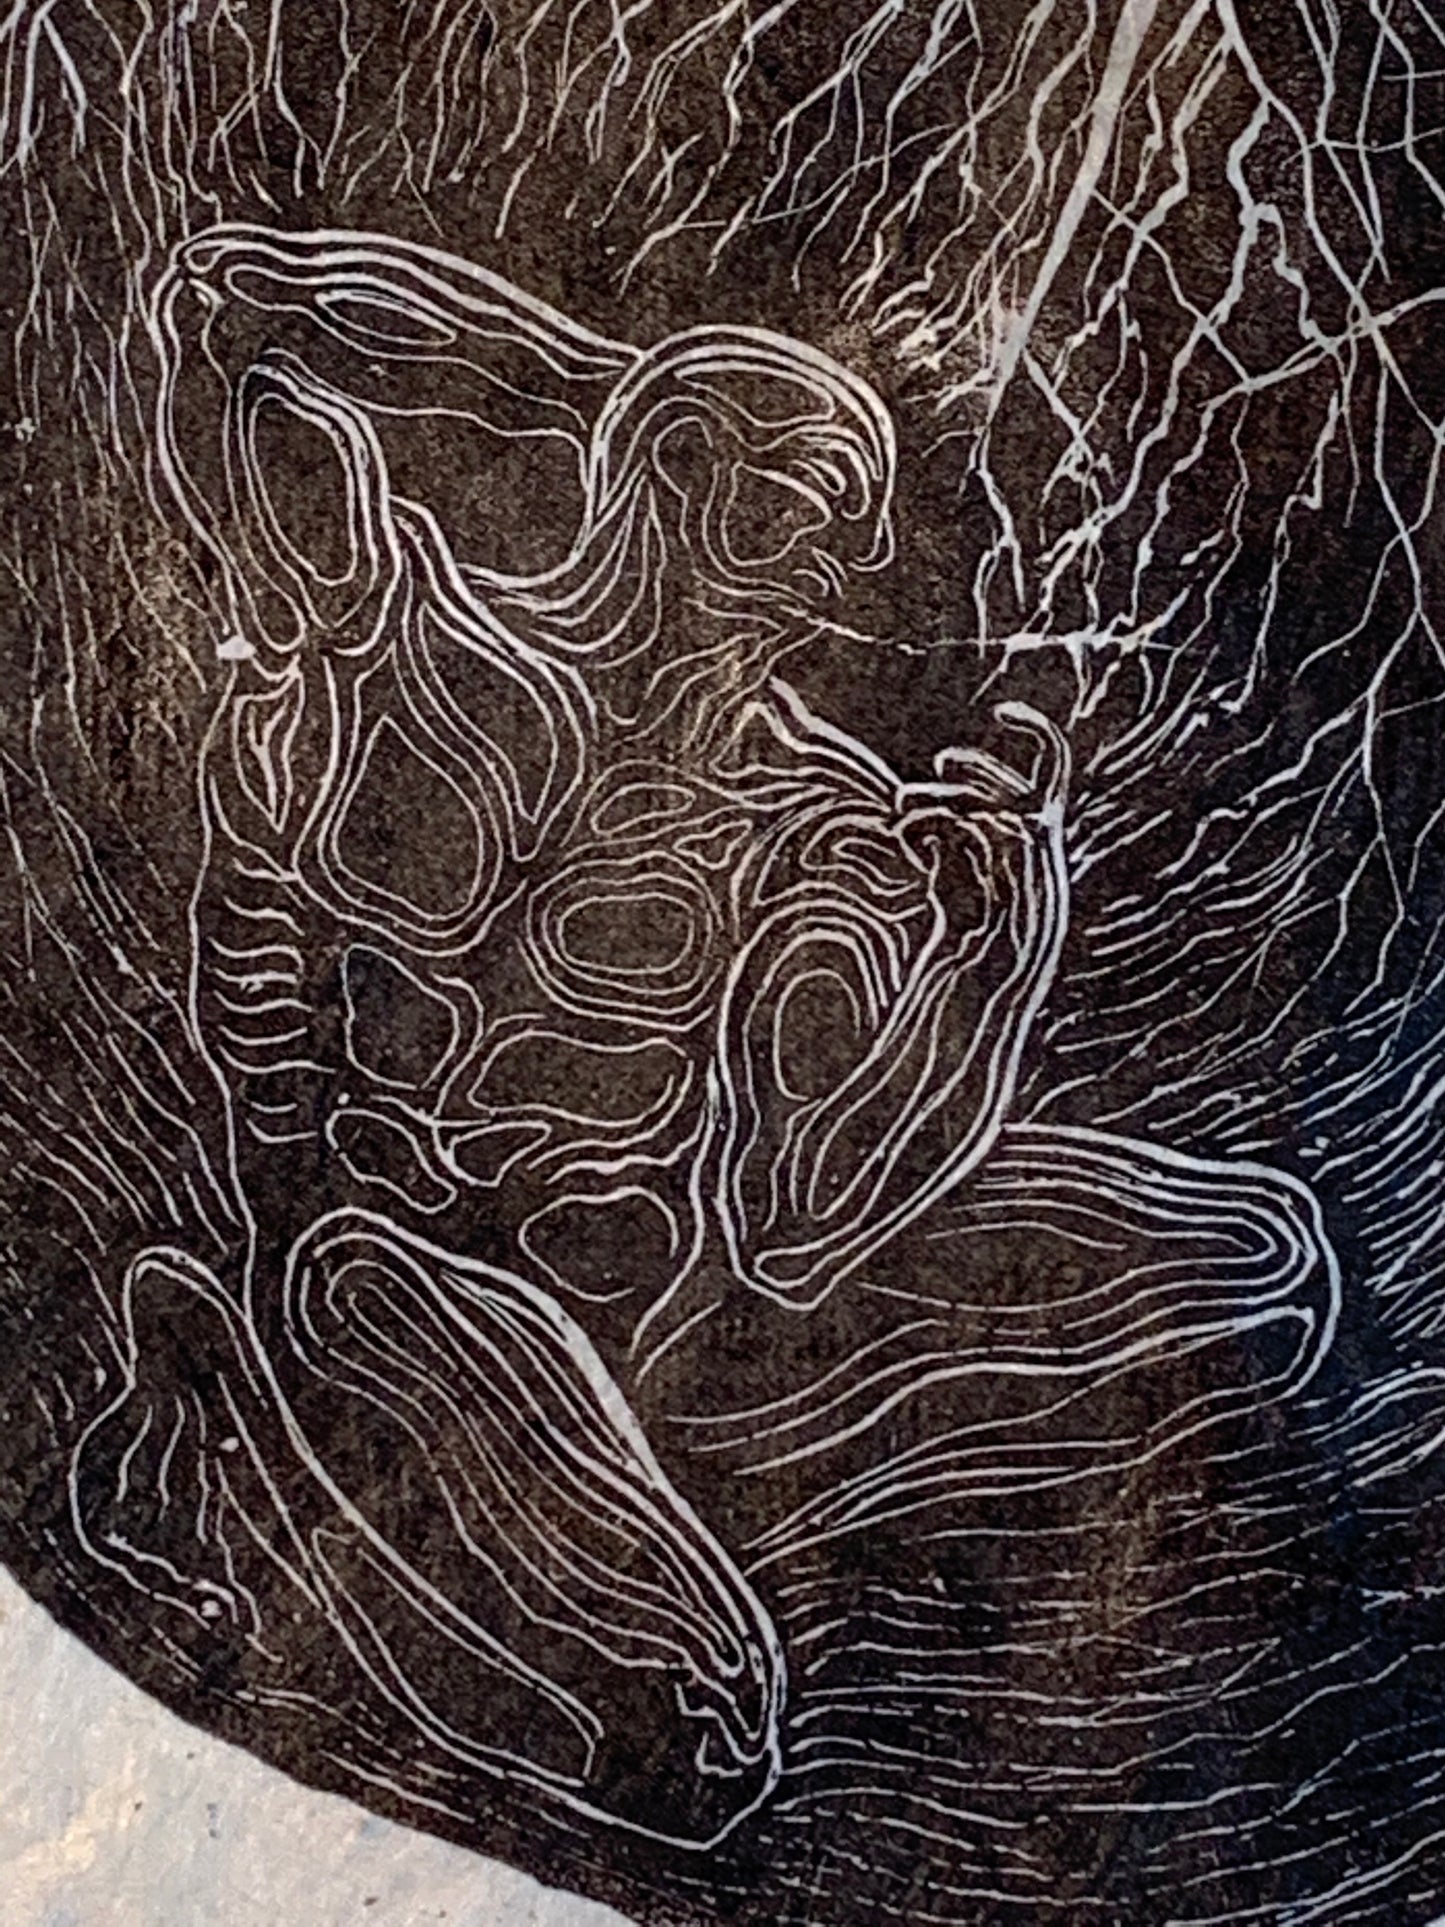 Storm Life of Tree Rings Original Wood Engraving Male in Storm Surreal